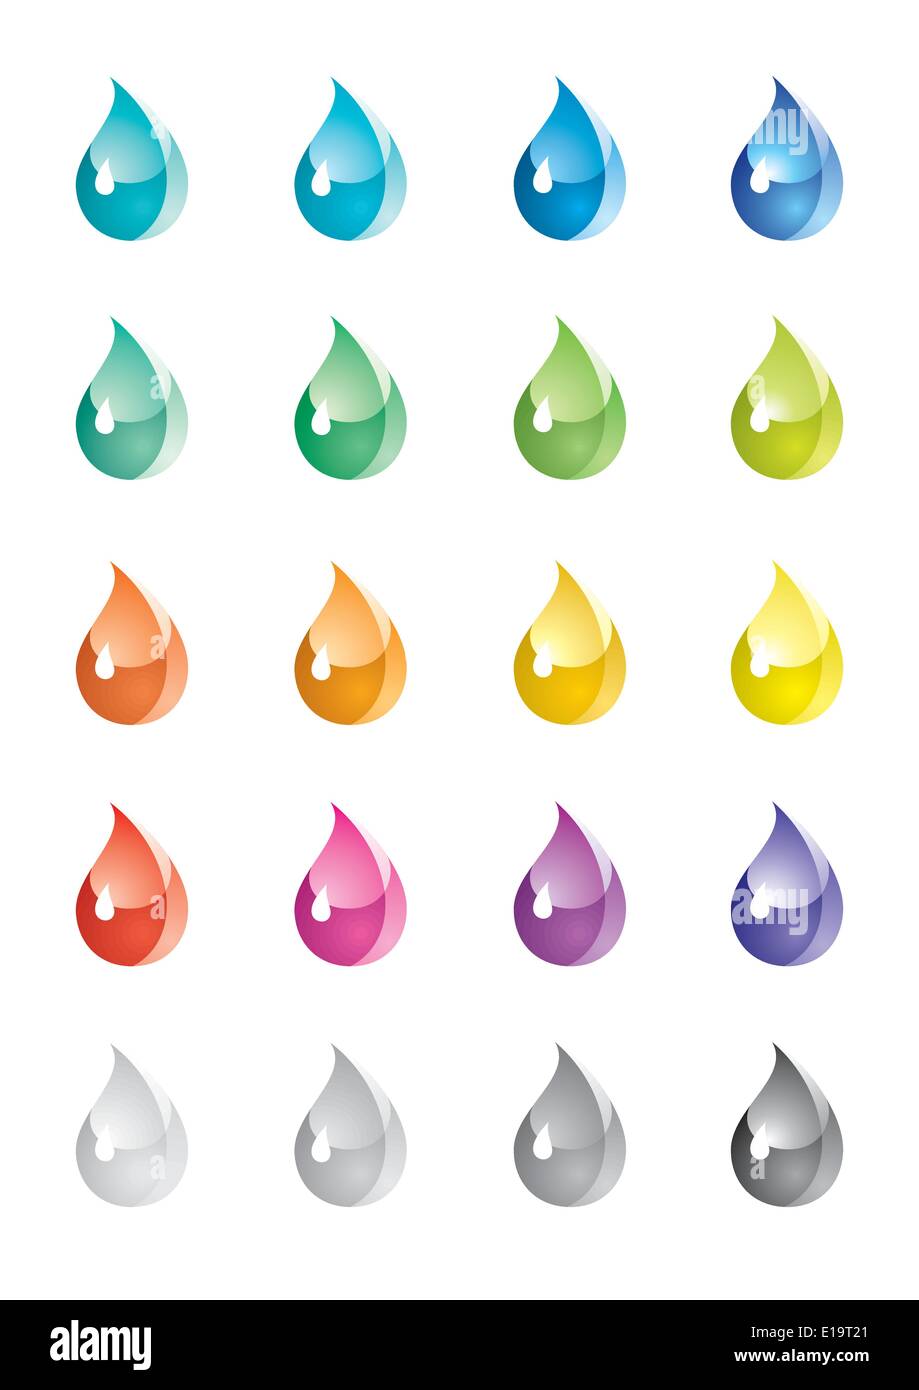 Un insieme di gocce colorate Immagine e Vettoriale - Alamy